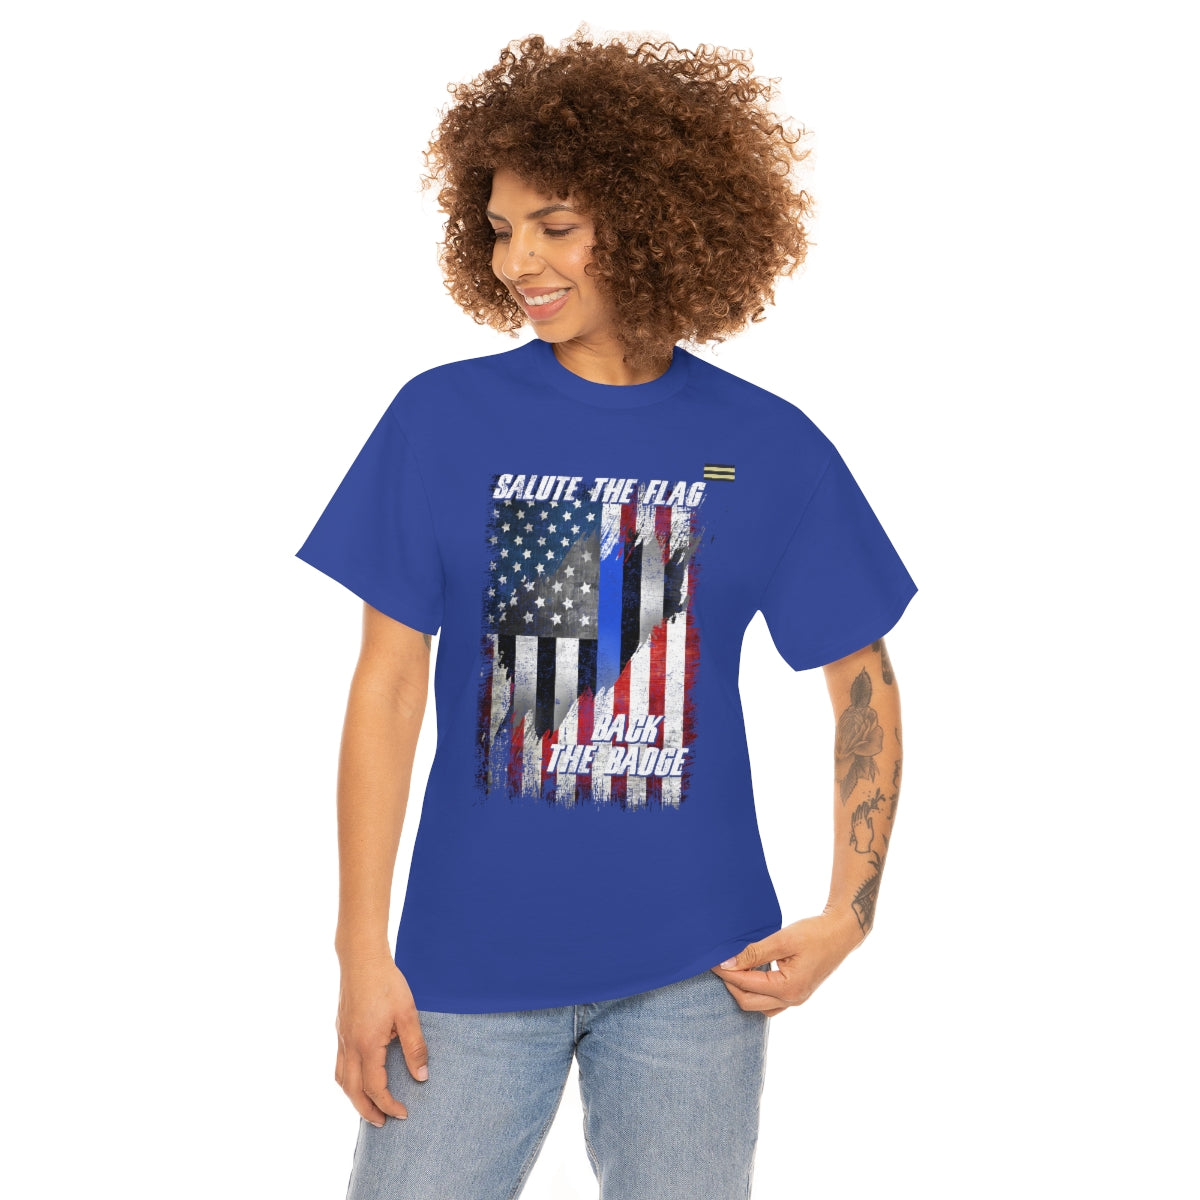 Salute The Flag-Back The Badge Law Enforcement T-shirt